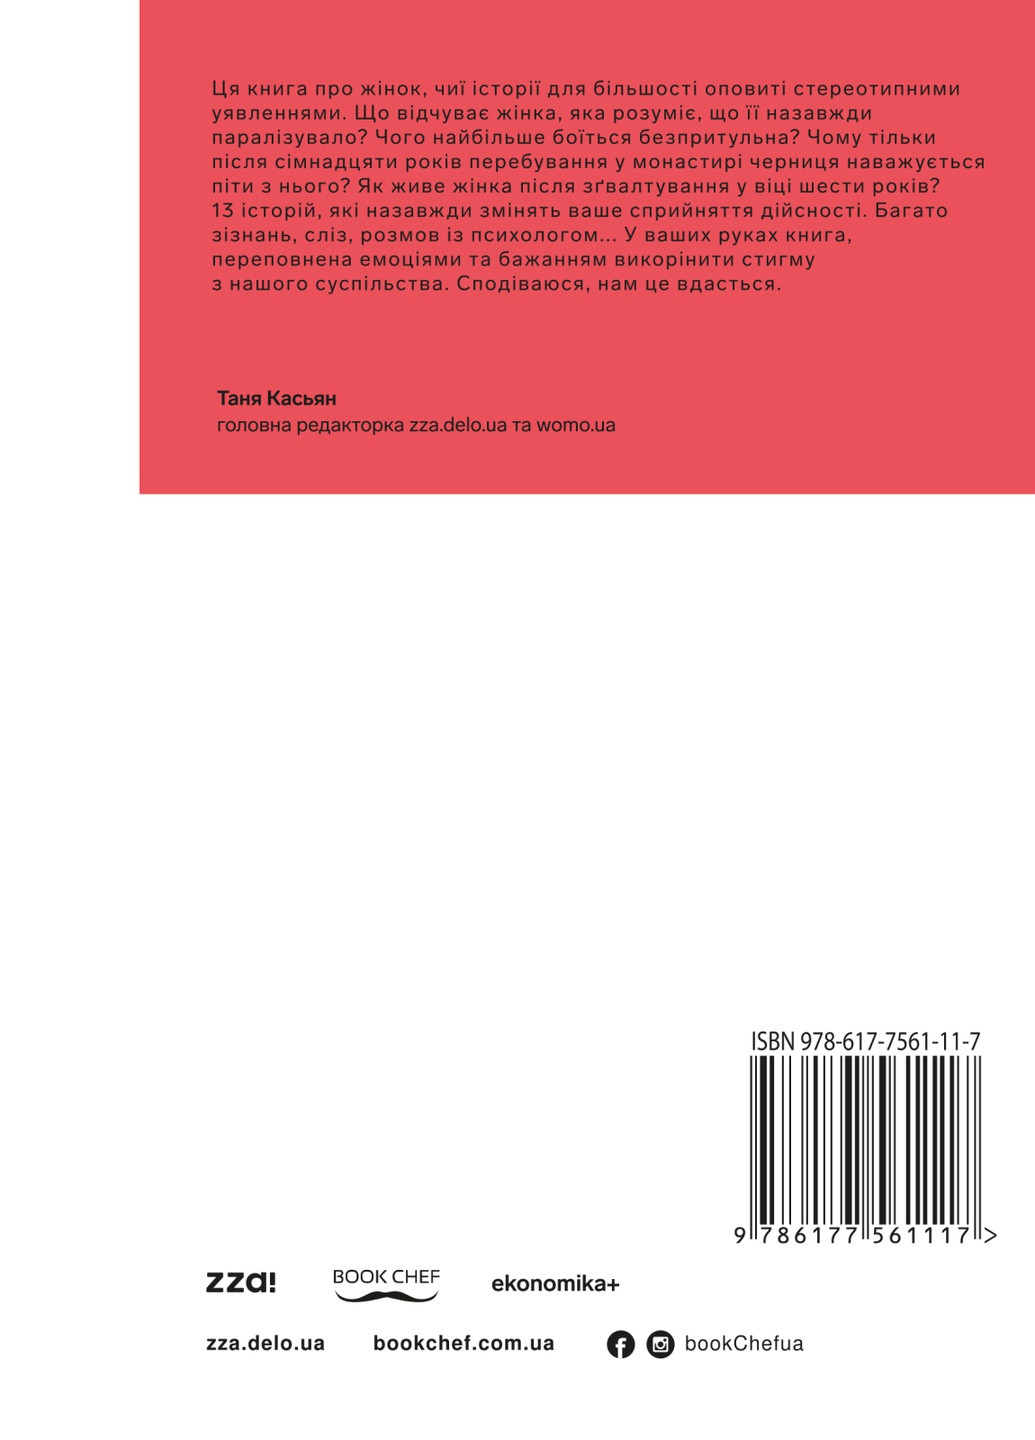 Книга Про що мовчать - Таня Касьян BookChef (9786177561117) Издательство "BookChef" (258356507)